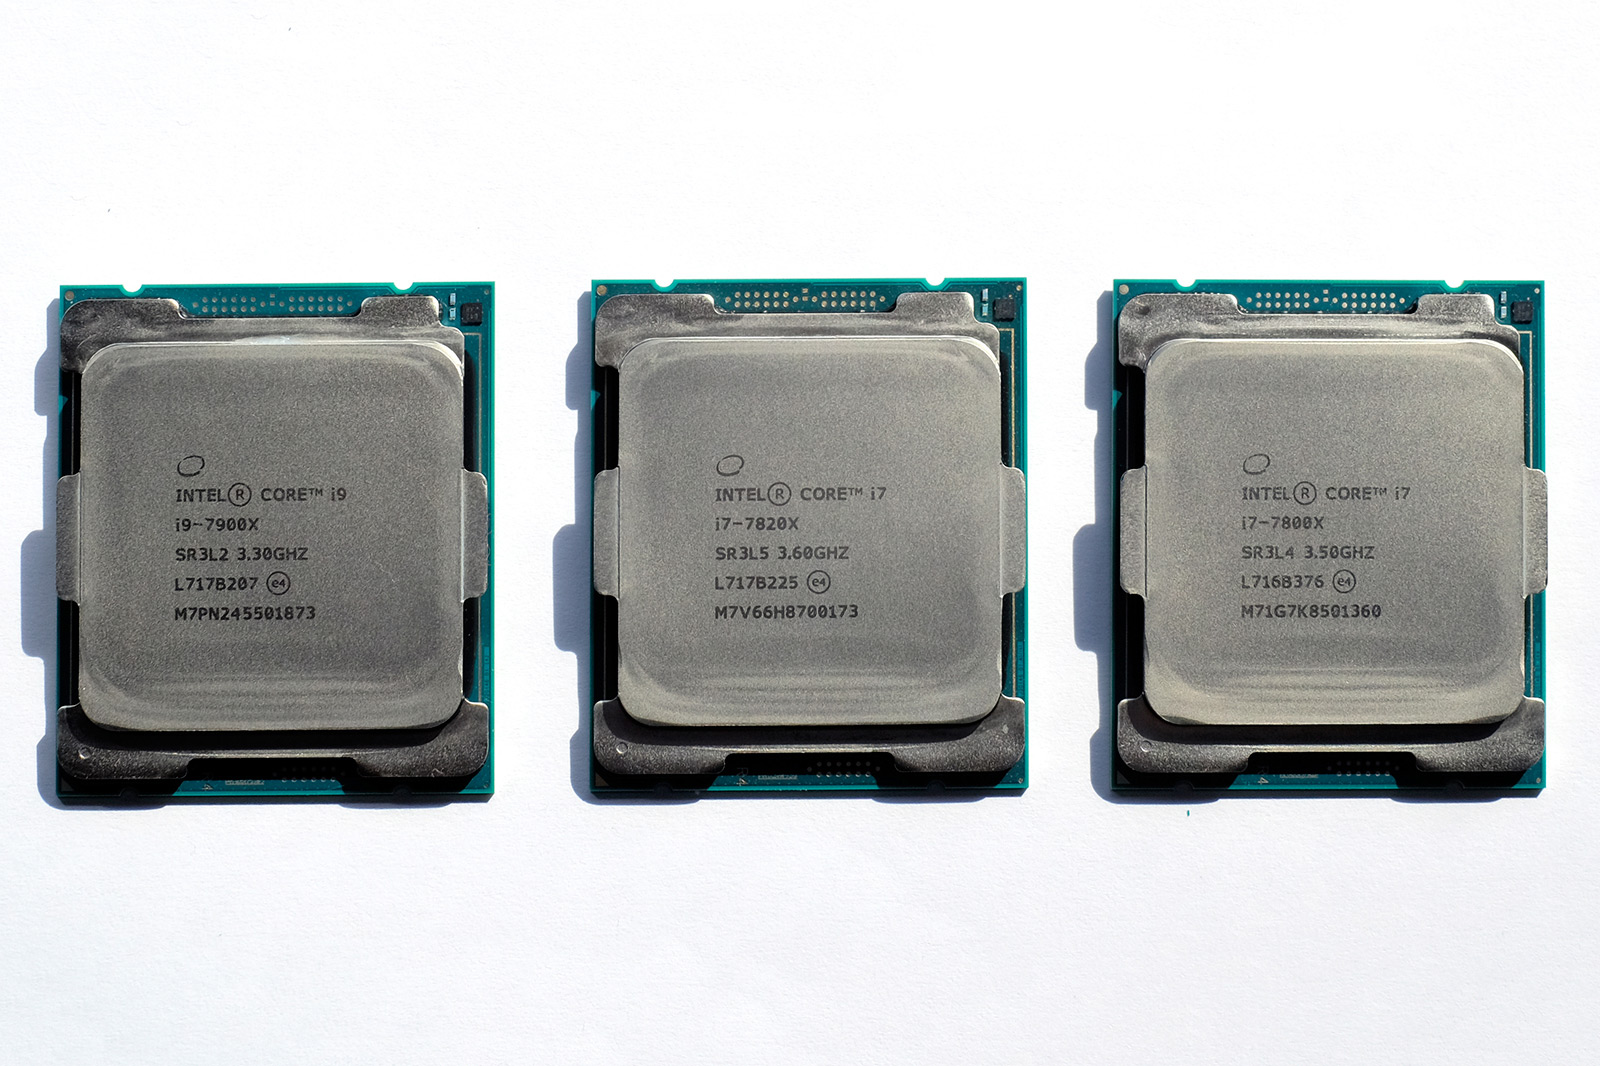 9 7900x купить. I9 7900k. Core i9 7900x. Intel Core i9-7900x (Box). Intel Core i7-7820x.